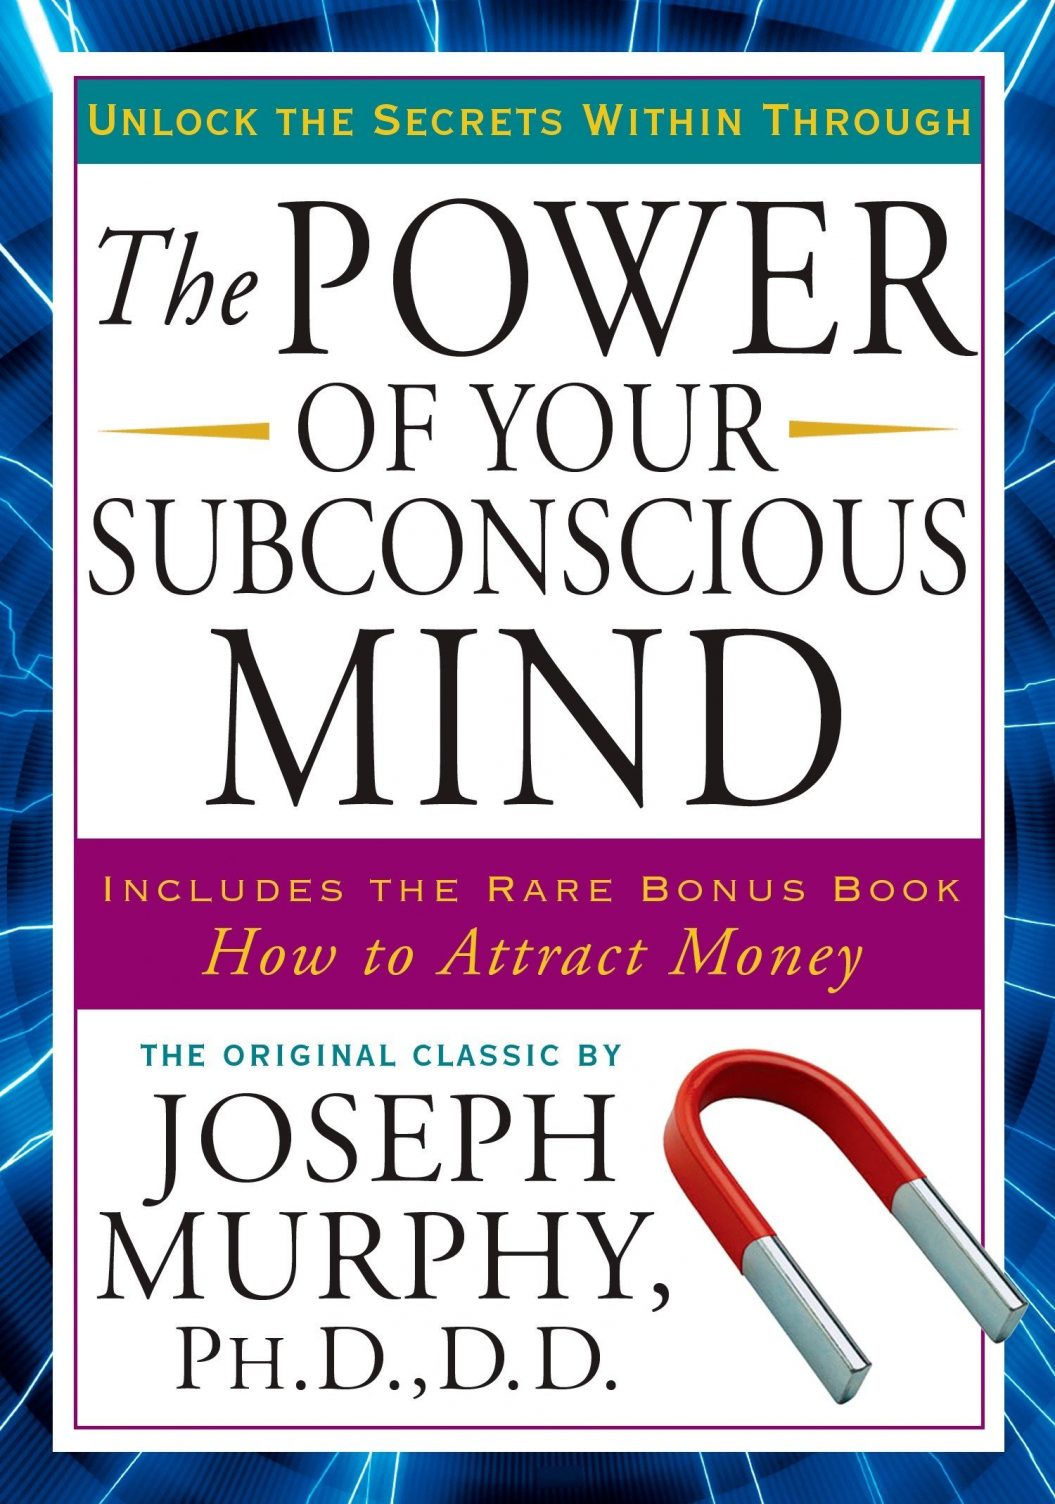 Power of your subconscious mind-Social pakora